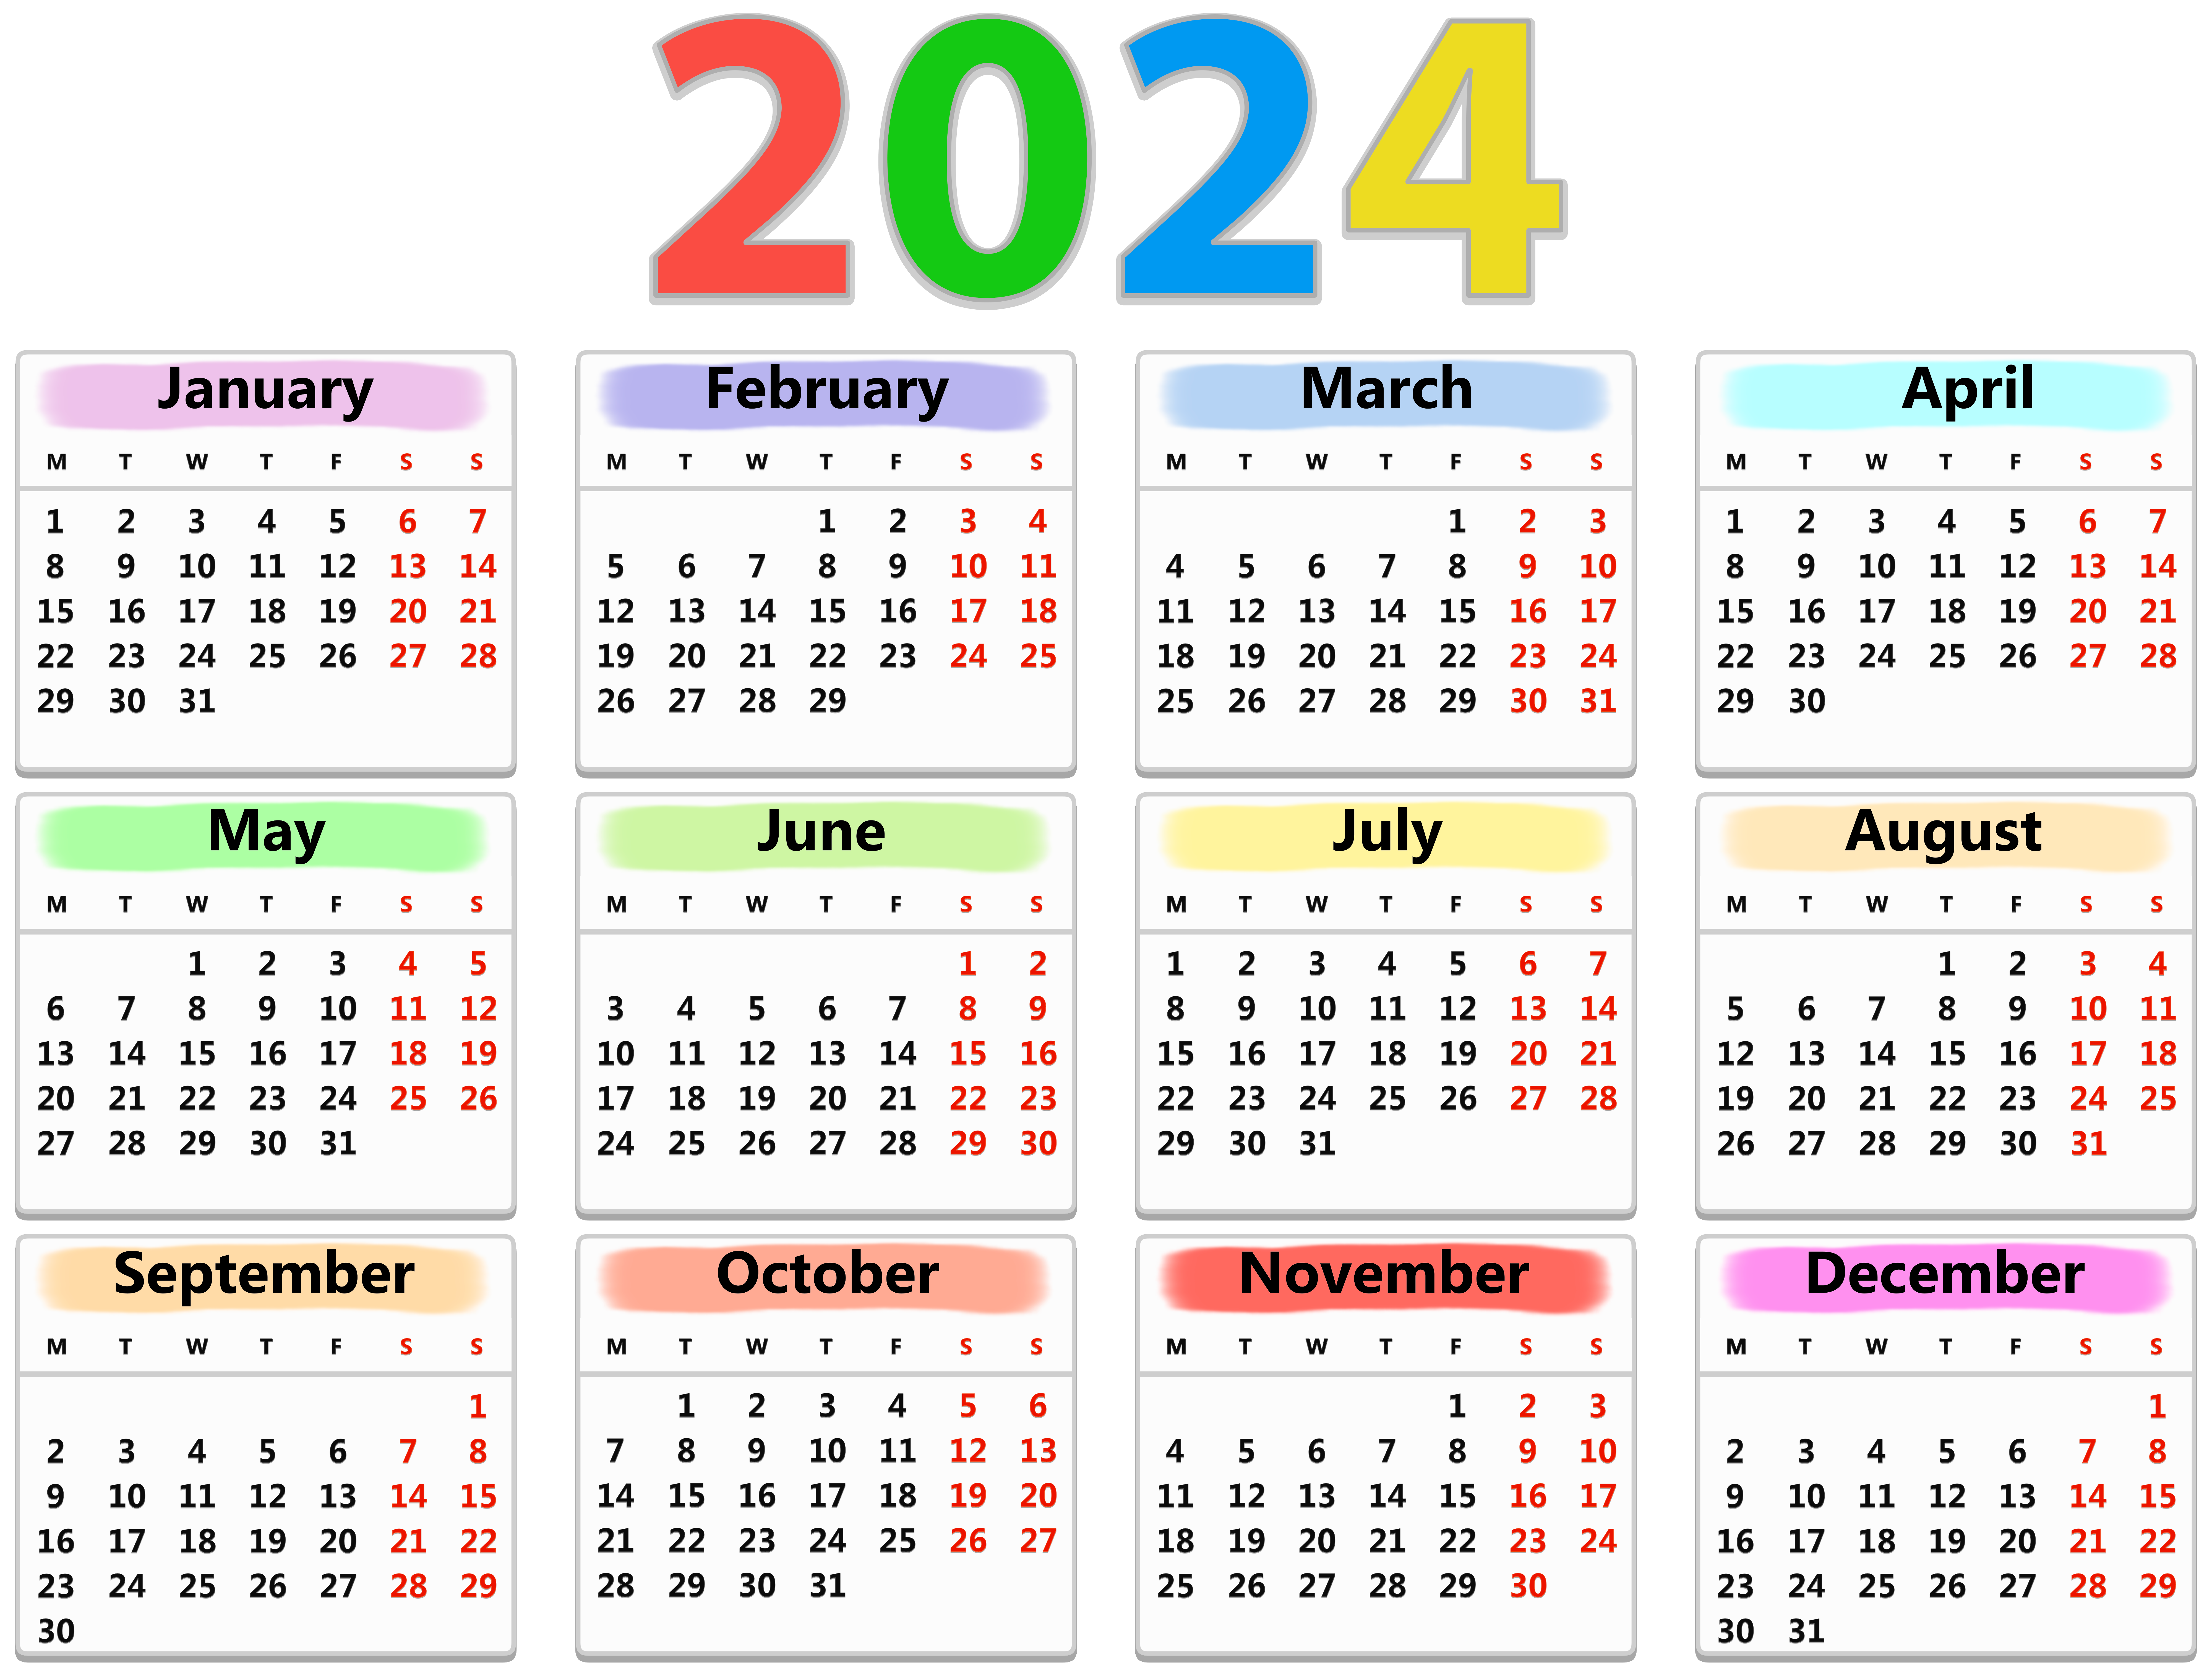 Calendar 2024 Banque d'images vectorielles - Alamy